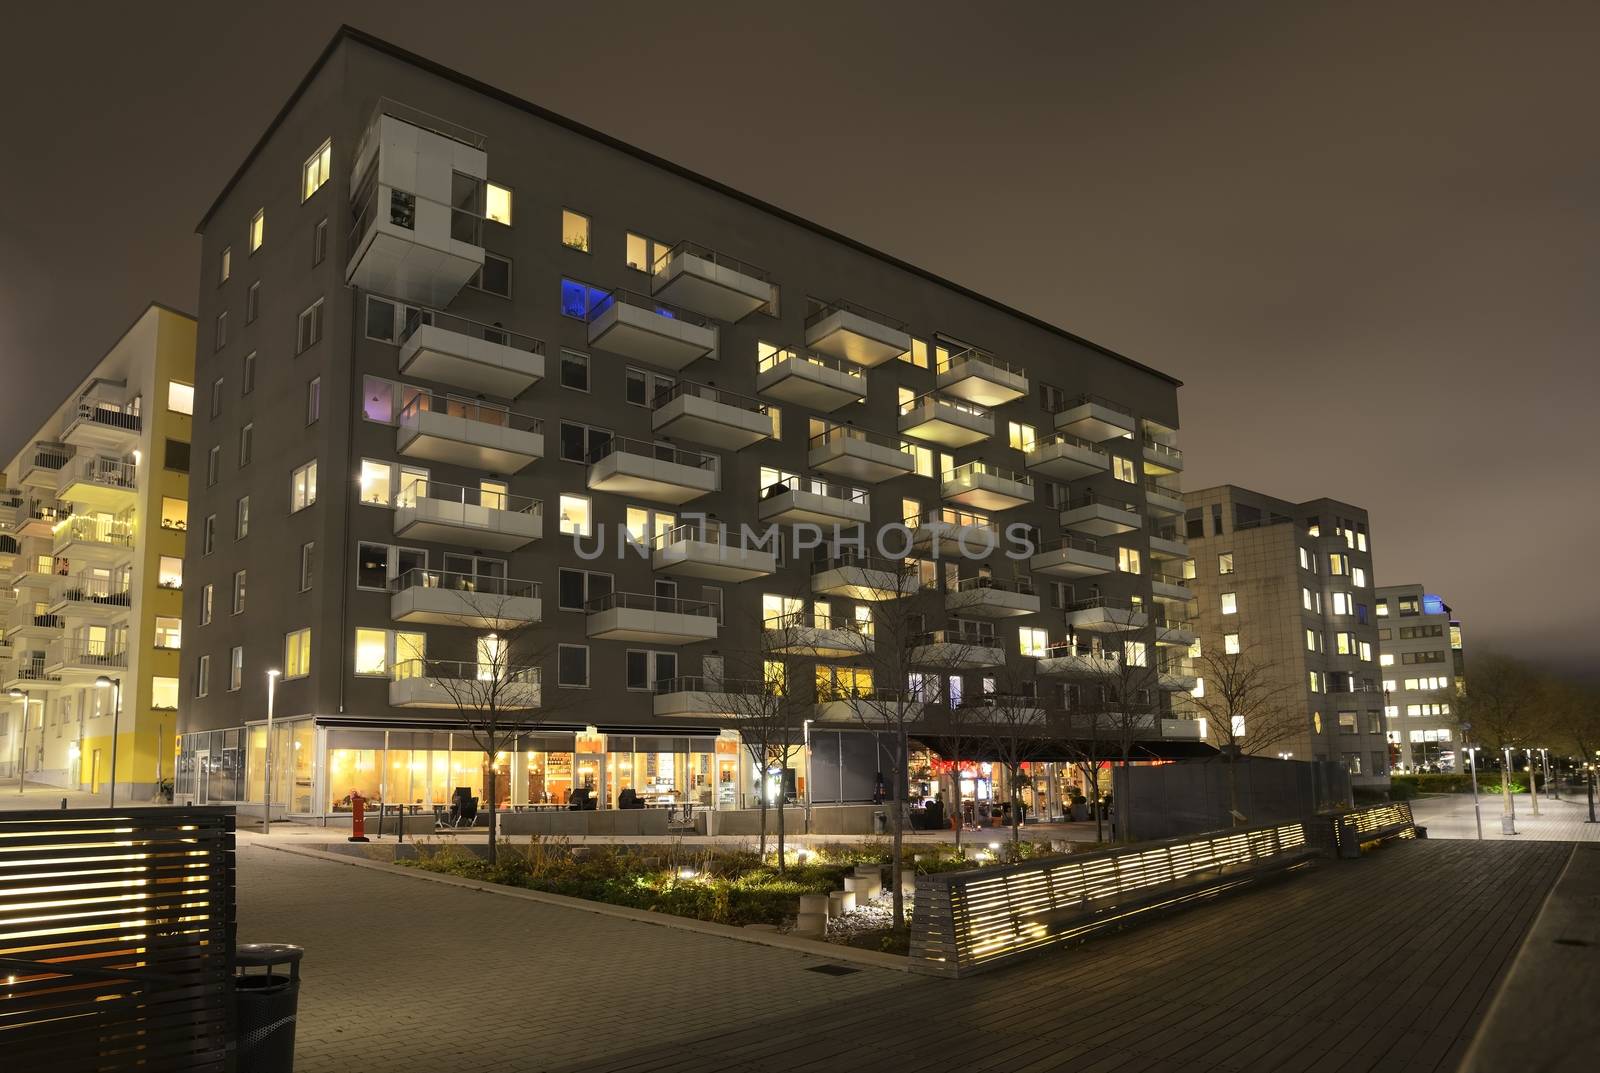 Apartment buildings in Liljeholmen - Stockholm.